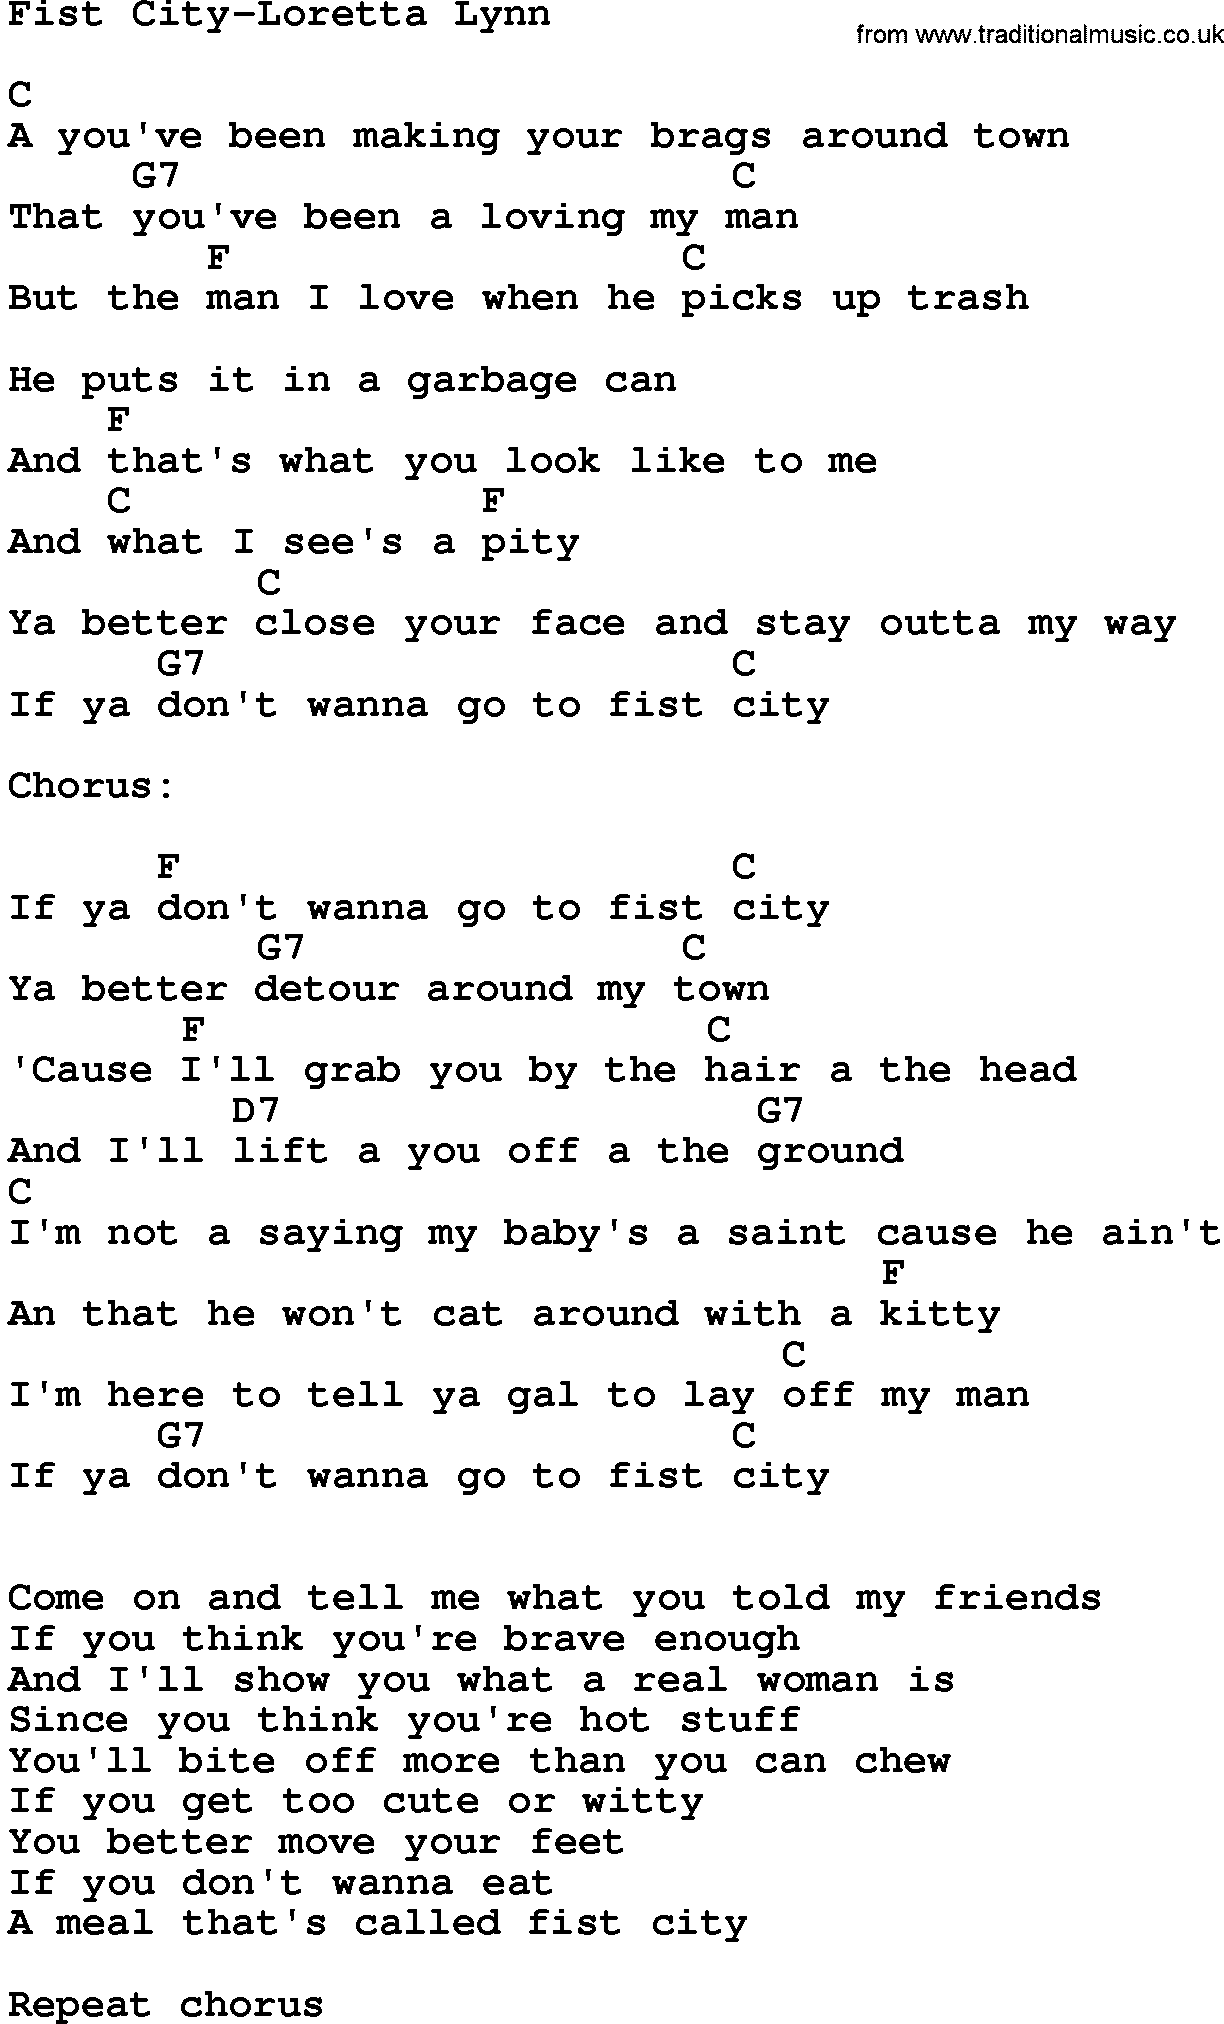 Country music song: Fist City-Loretta Lynn lyrics and chords